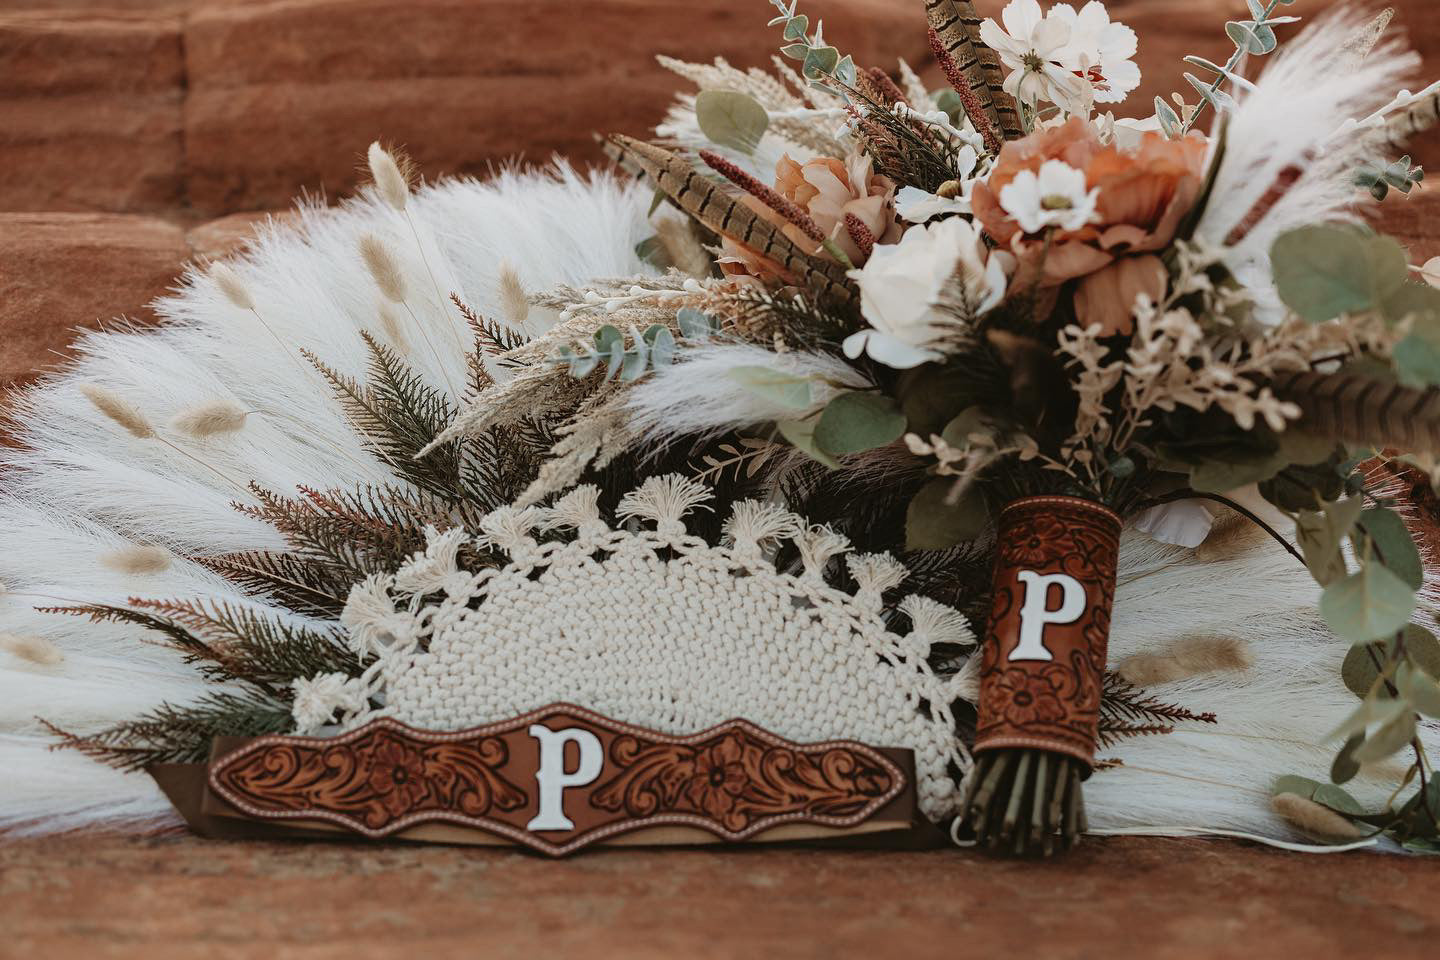 Custom leather wedding Bridal garter - DEPOSIT – Harvard and Hide